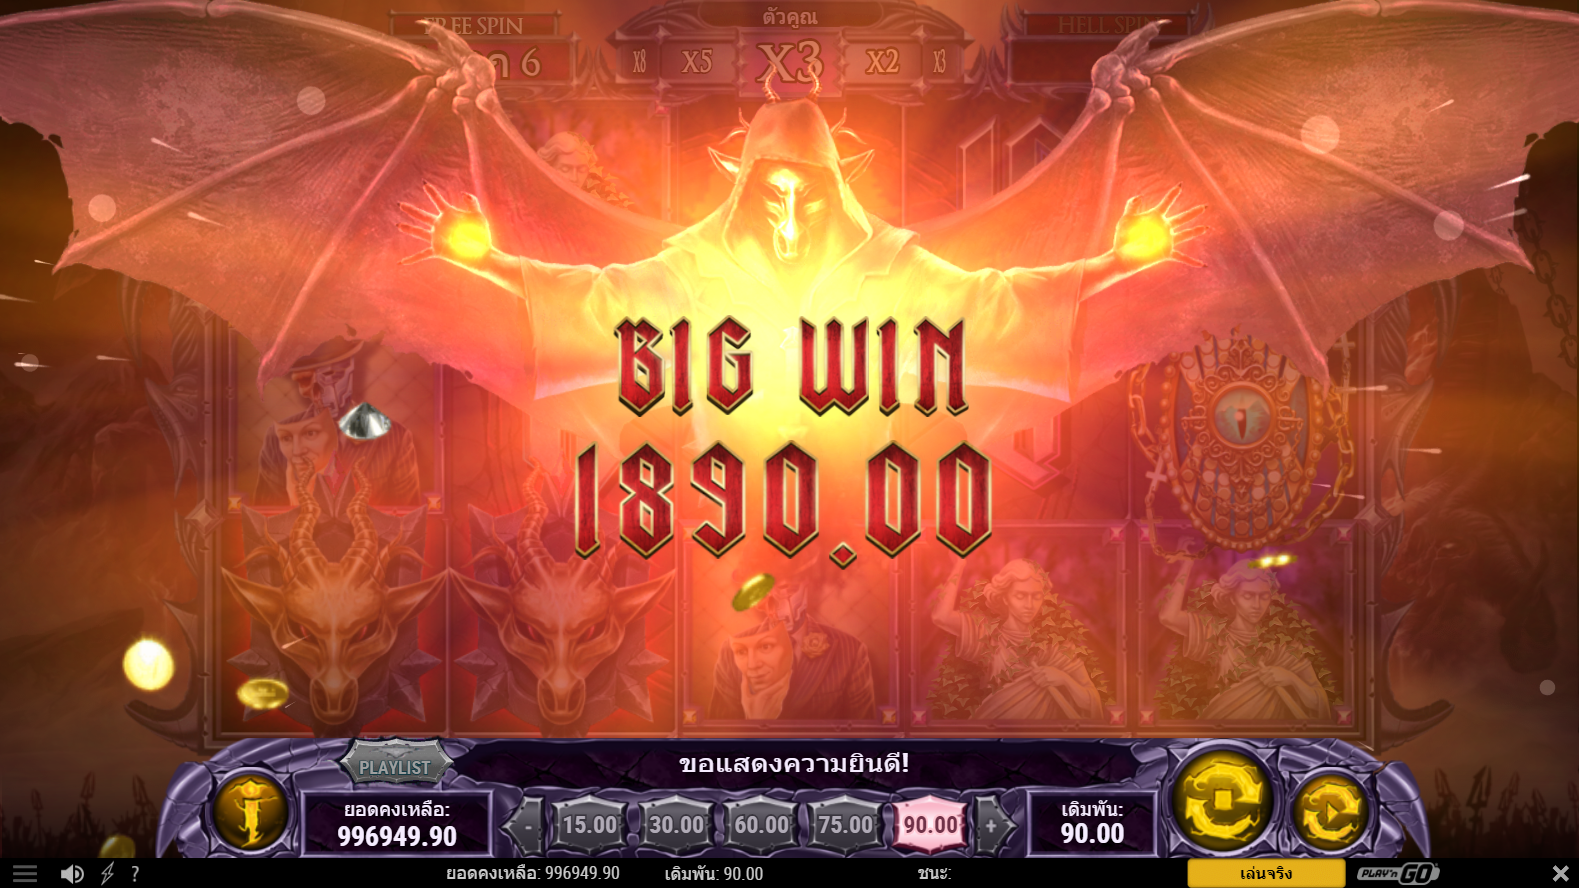 slot สล็อต PNG Demon - เกมสล็อตที่ลุ้นรับรางวัลมากถึง 5000x รวมเพลงแนวเฮฟวี่เมทัล! ลงทะเบียนรับทันที200 pay69 2